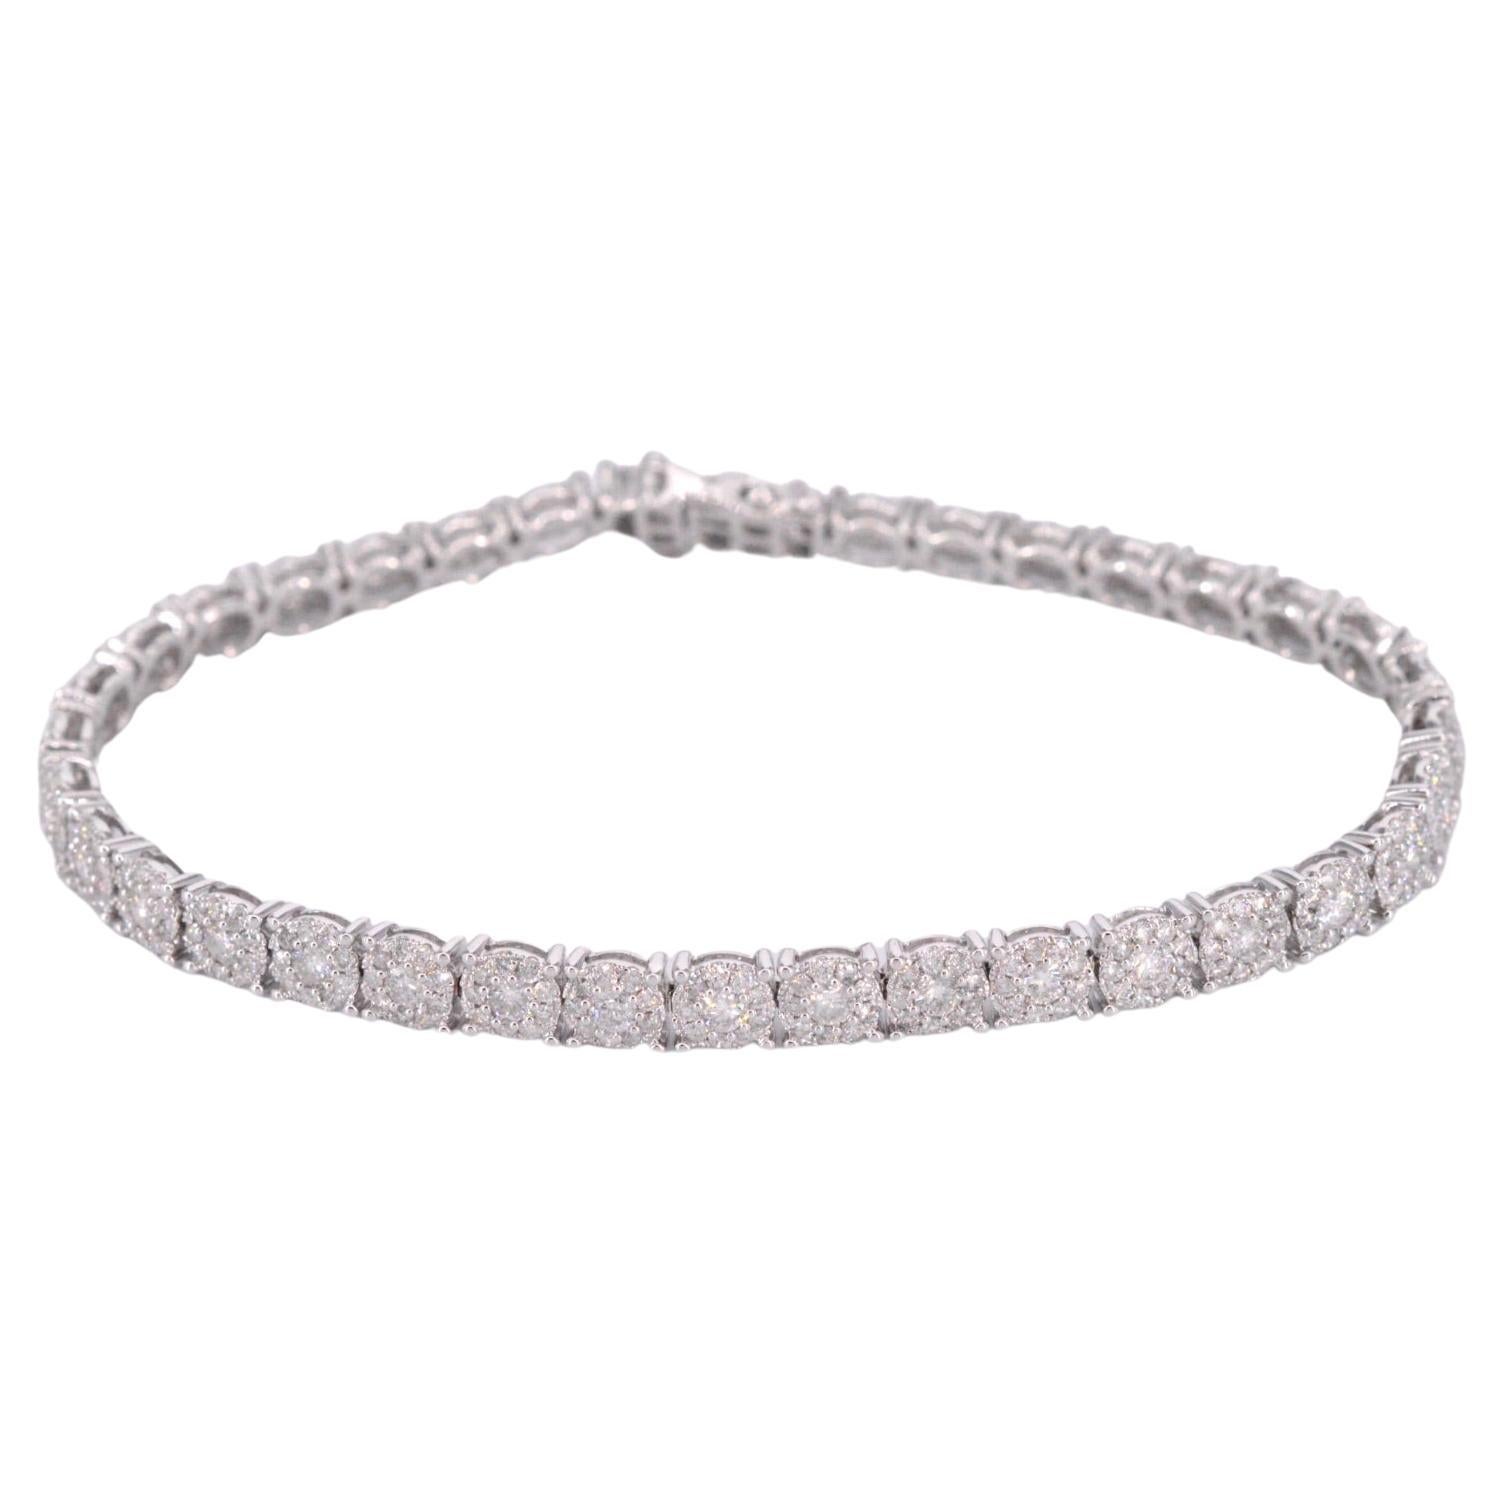 White gold tennis bracelet with diamonds 5.50 carat For Sale